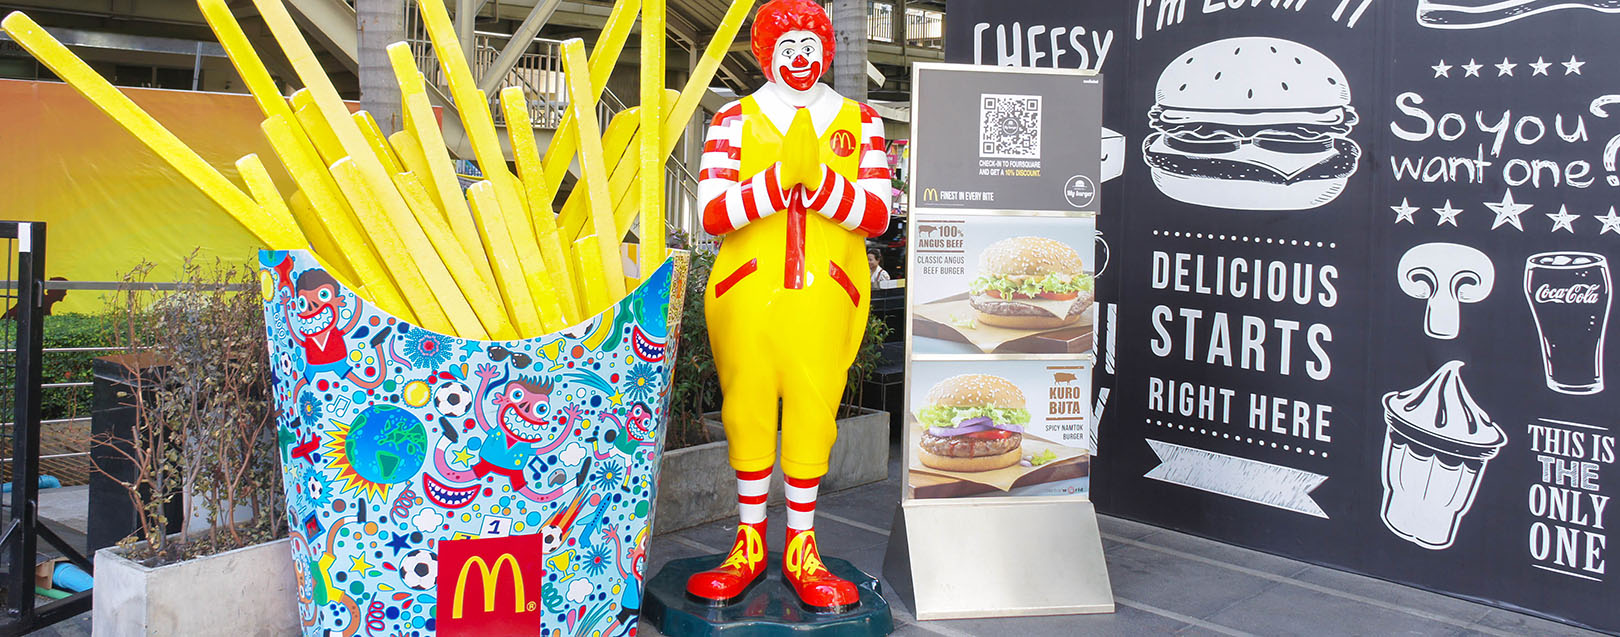 McDonald’s sells its China operations for $2.1 billion